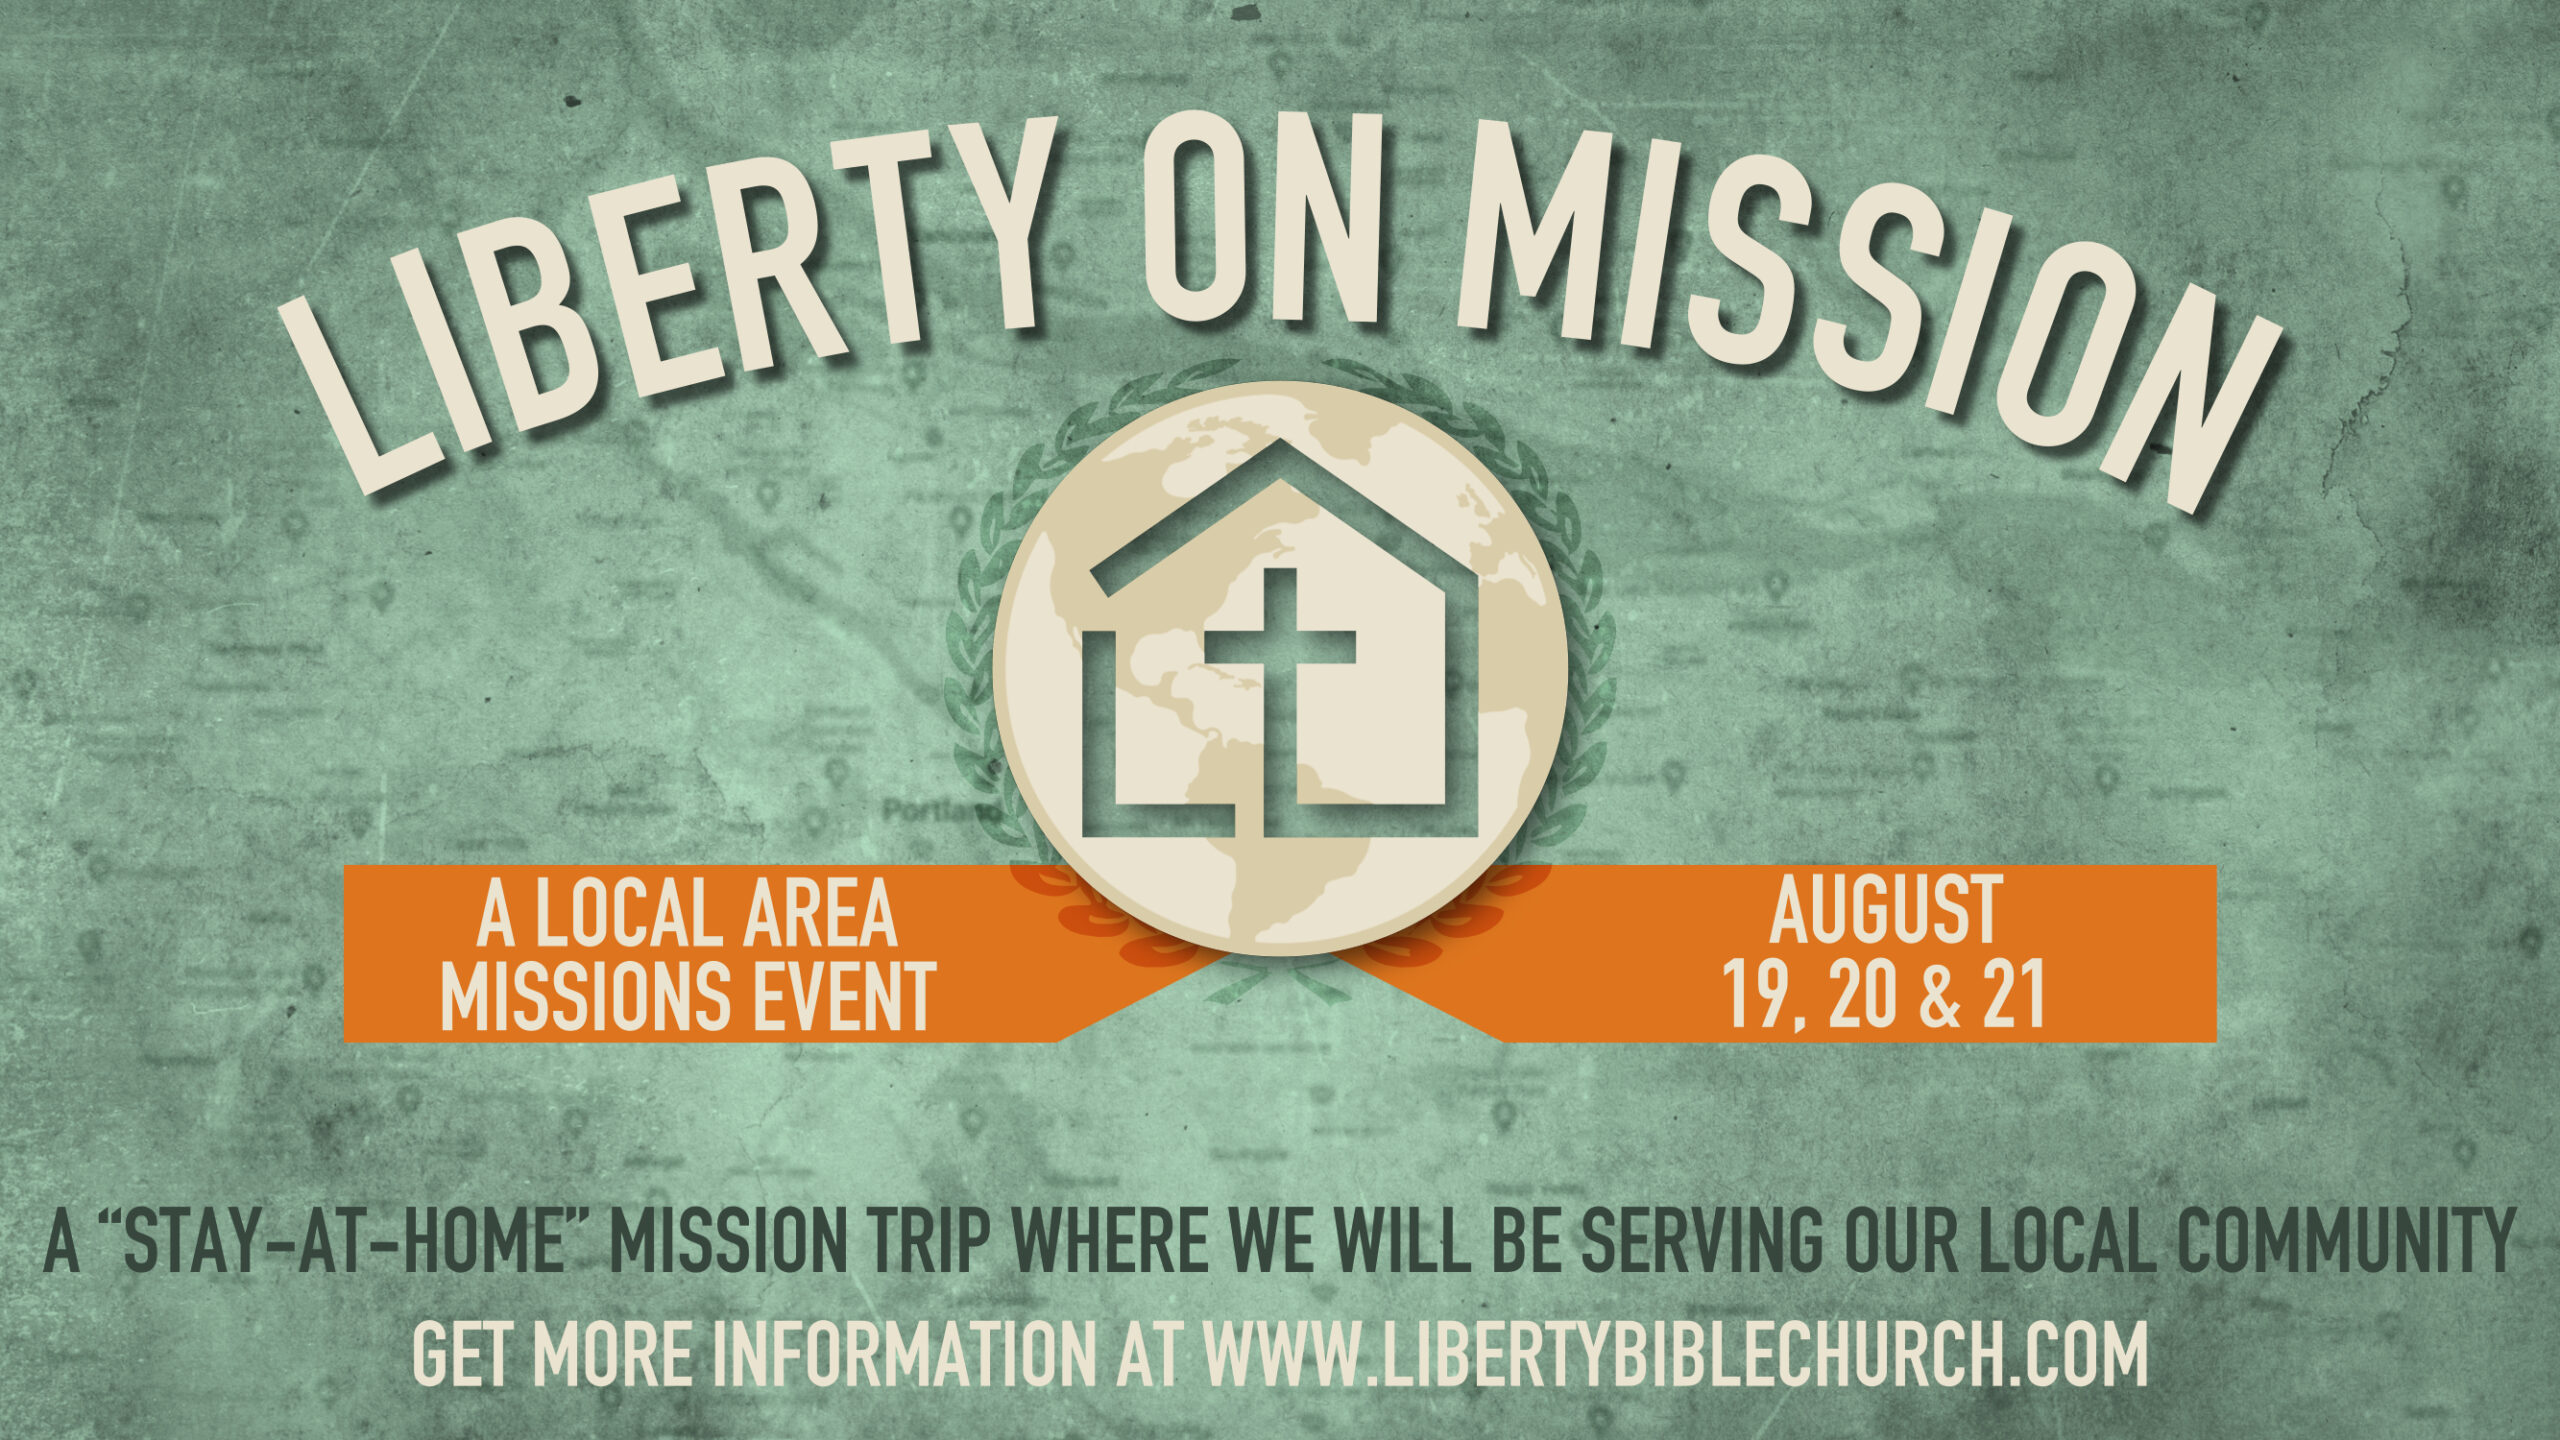 Liberty On Mission